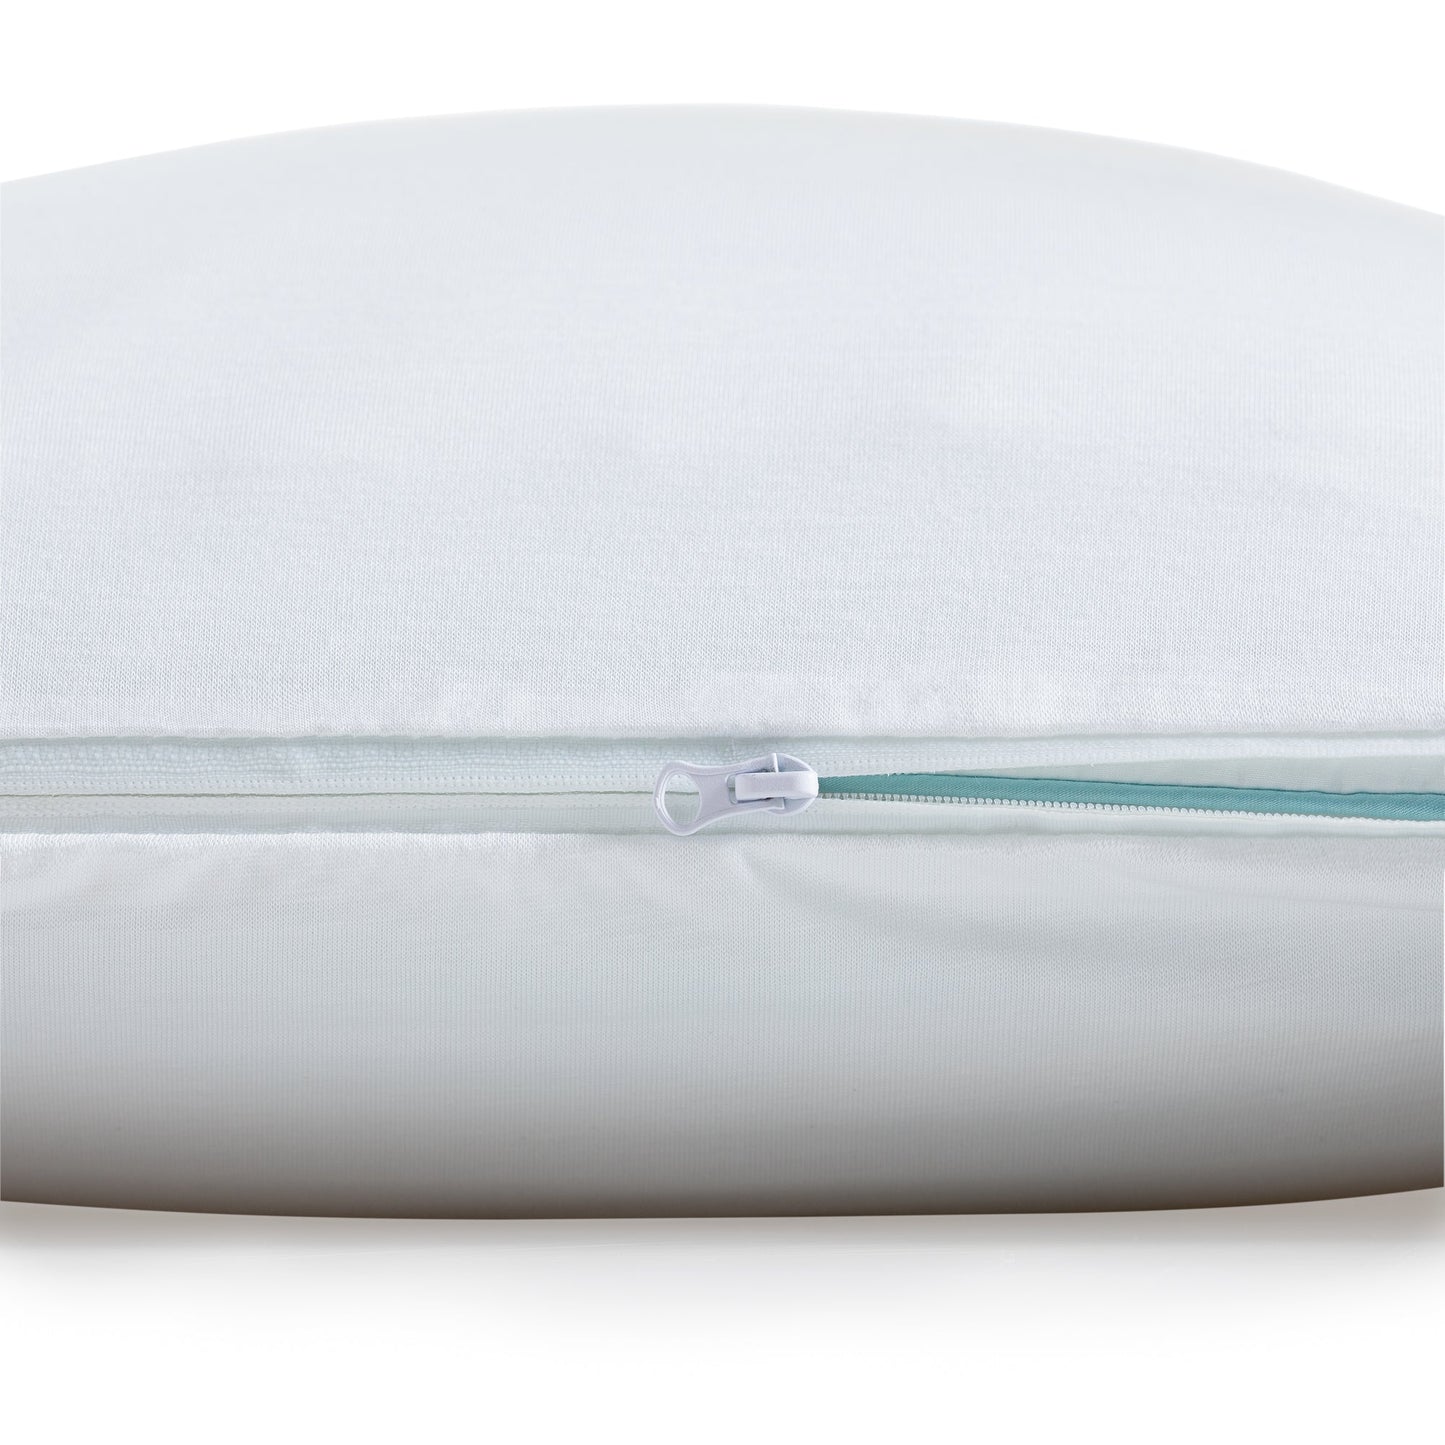 PR1ME® Smooth Pillow Protector